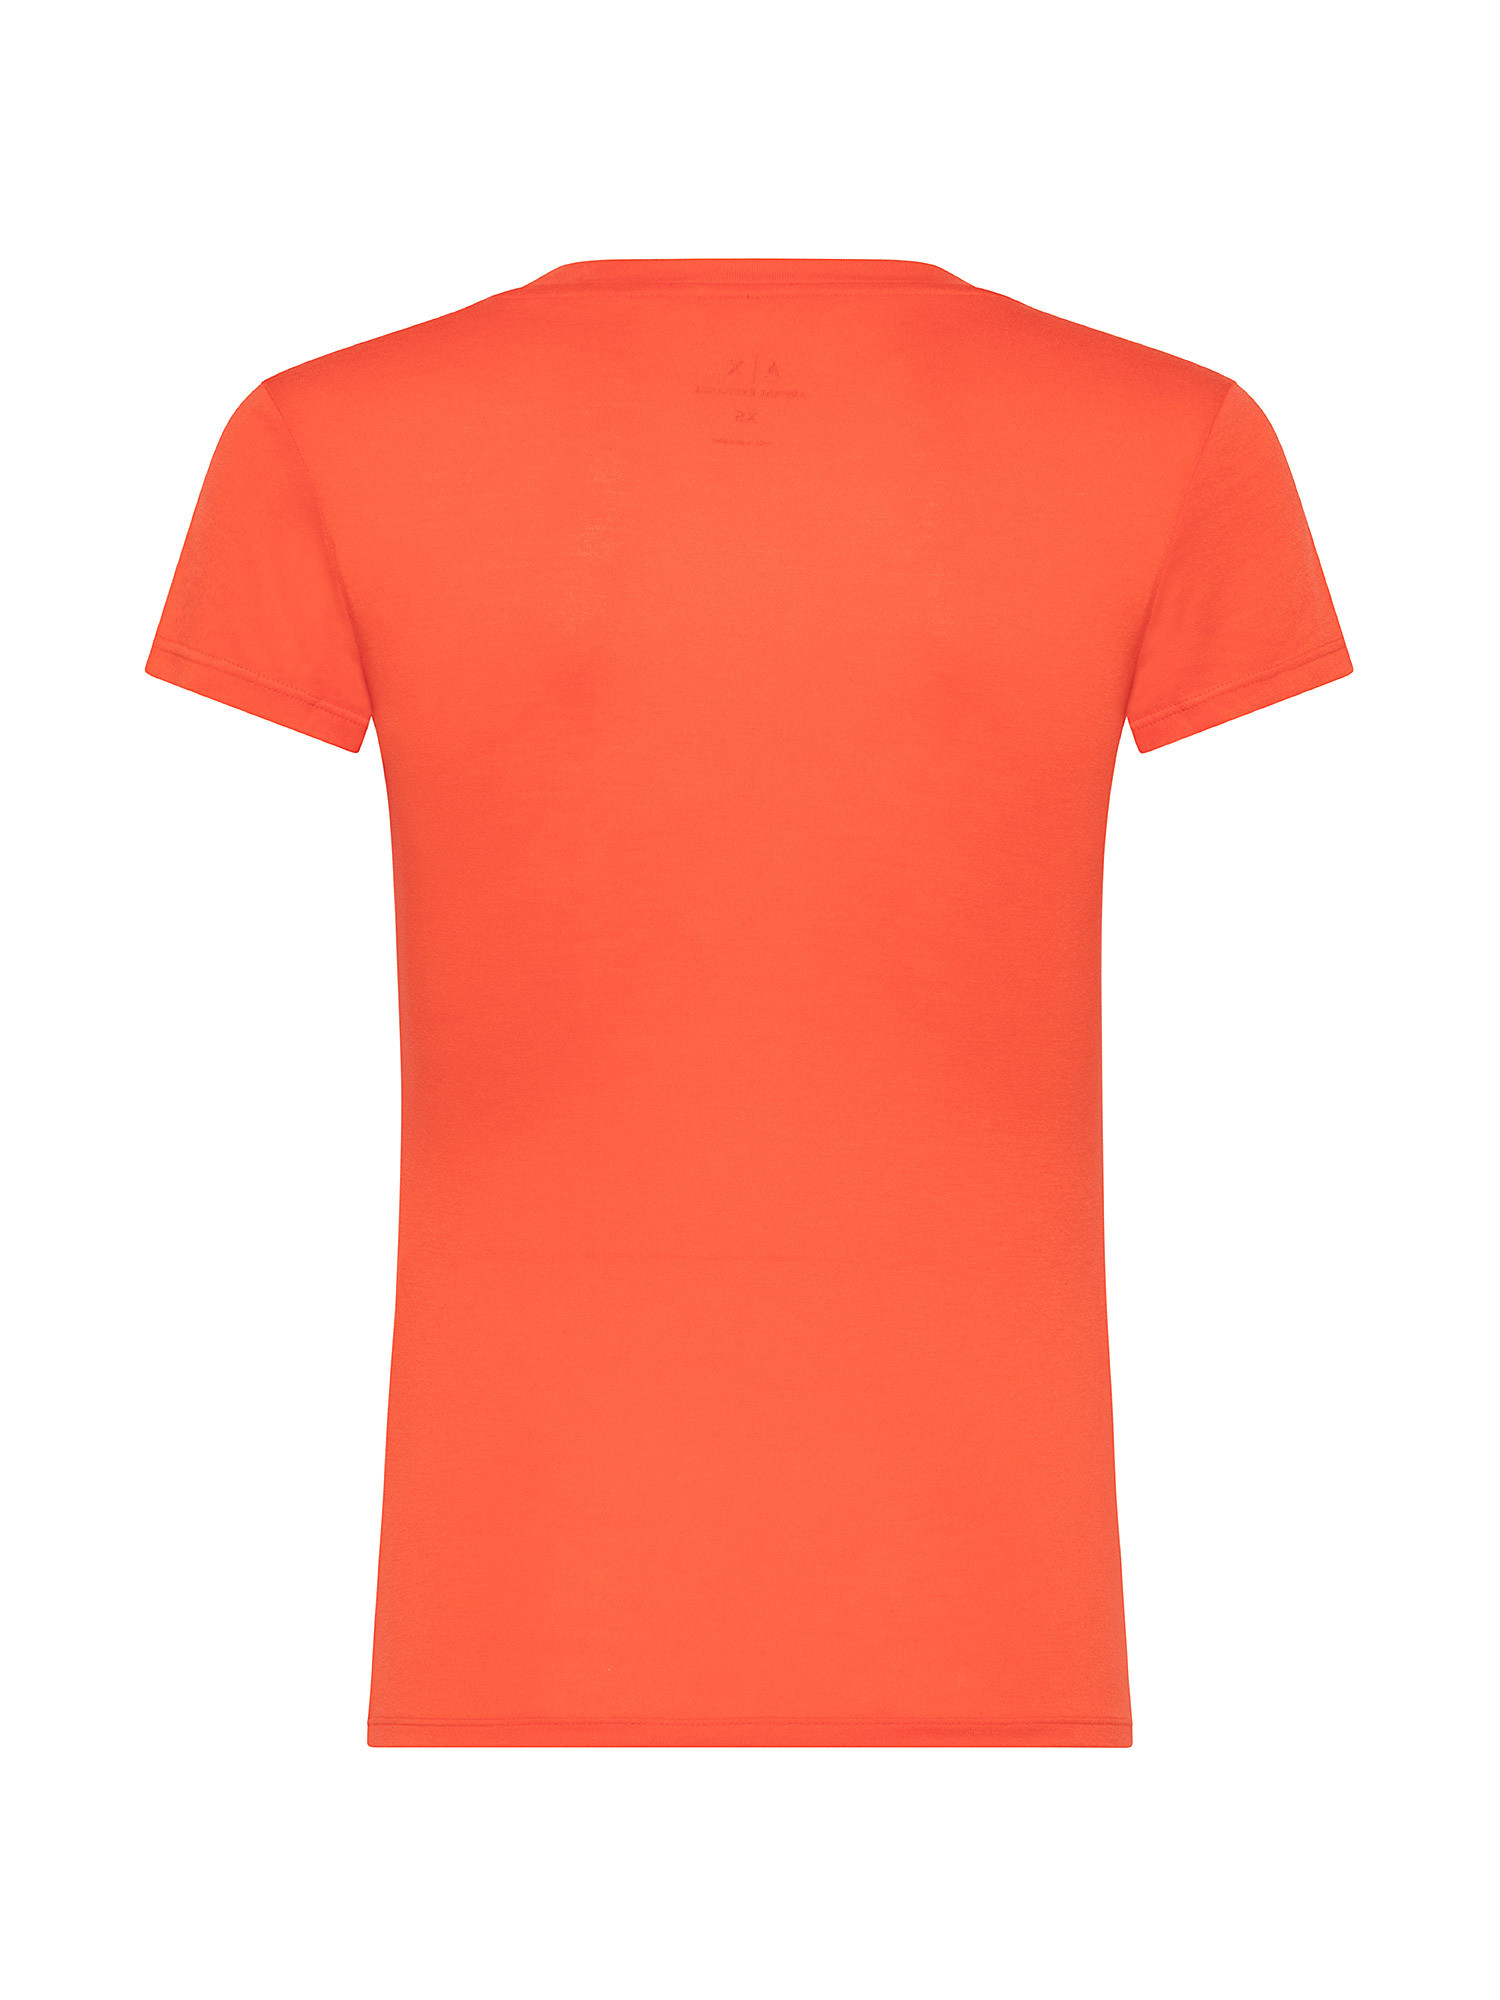 T-shirt slim fit scollo a V, Arancione, large image number 1